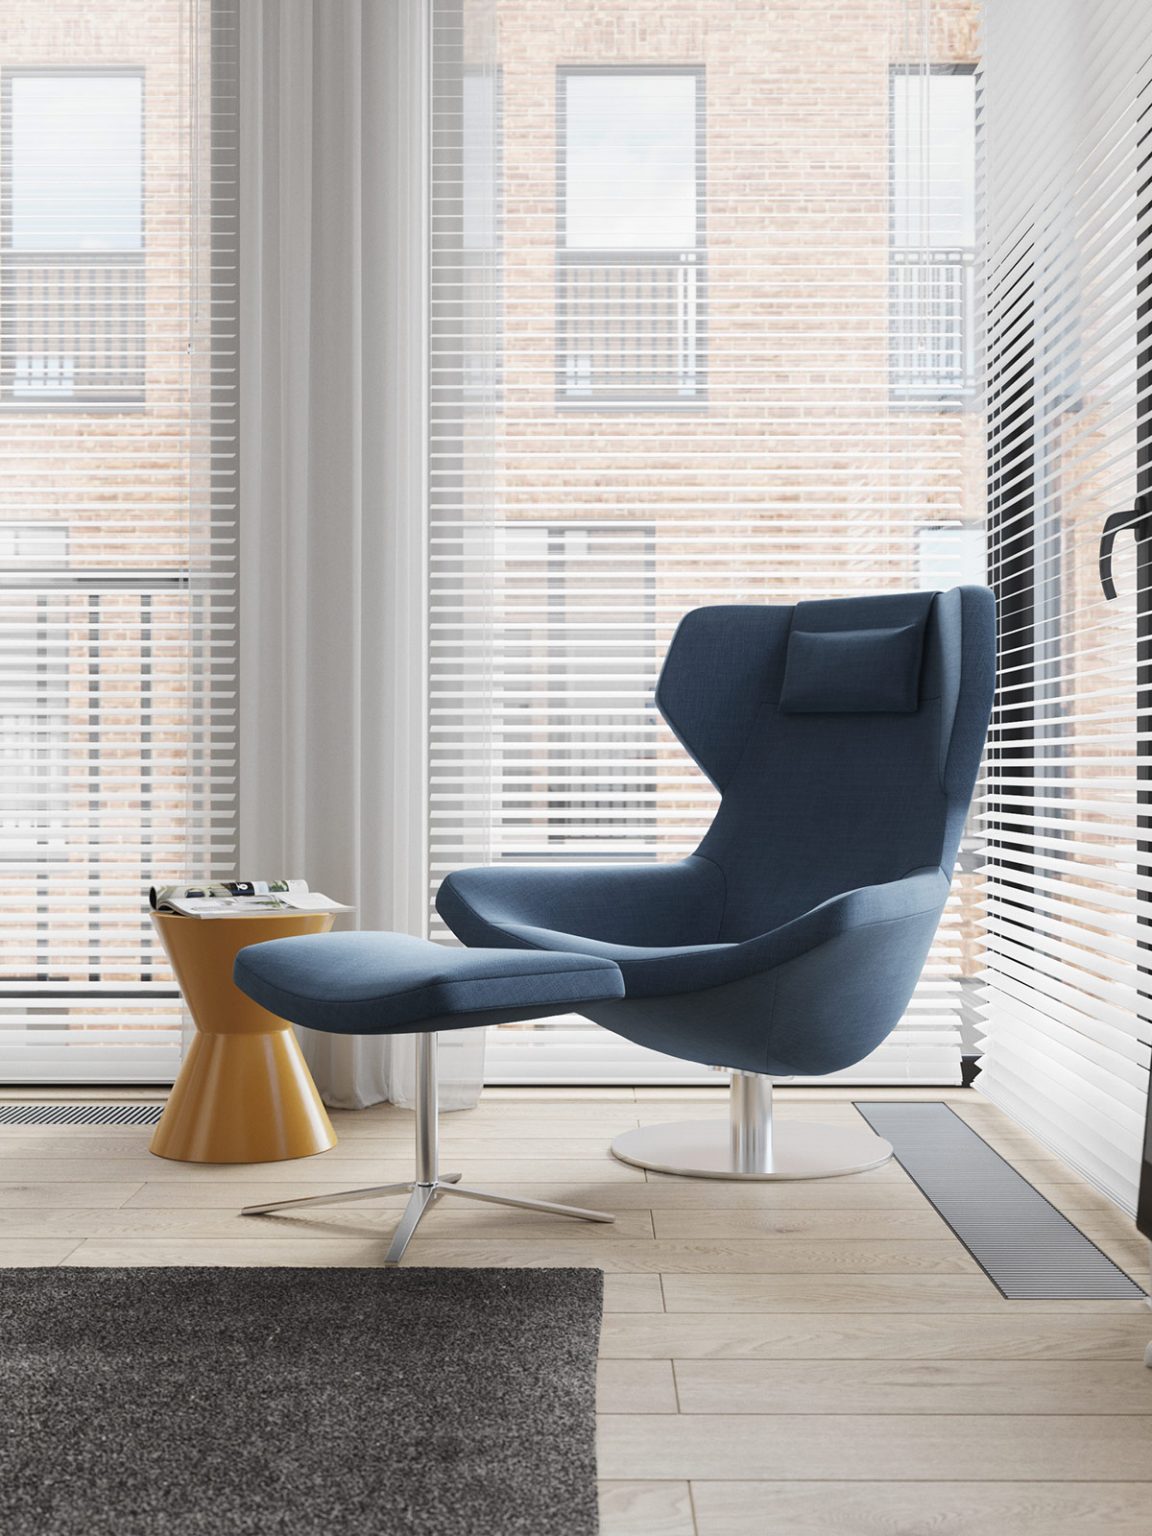 modern chair with ottoman | Interior Design Ideas